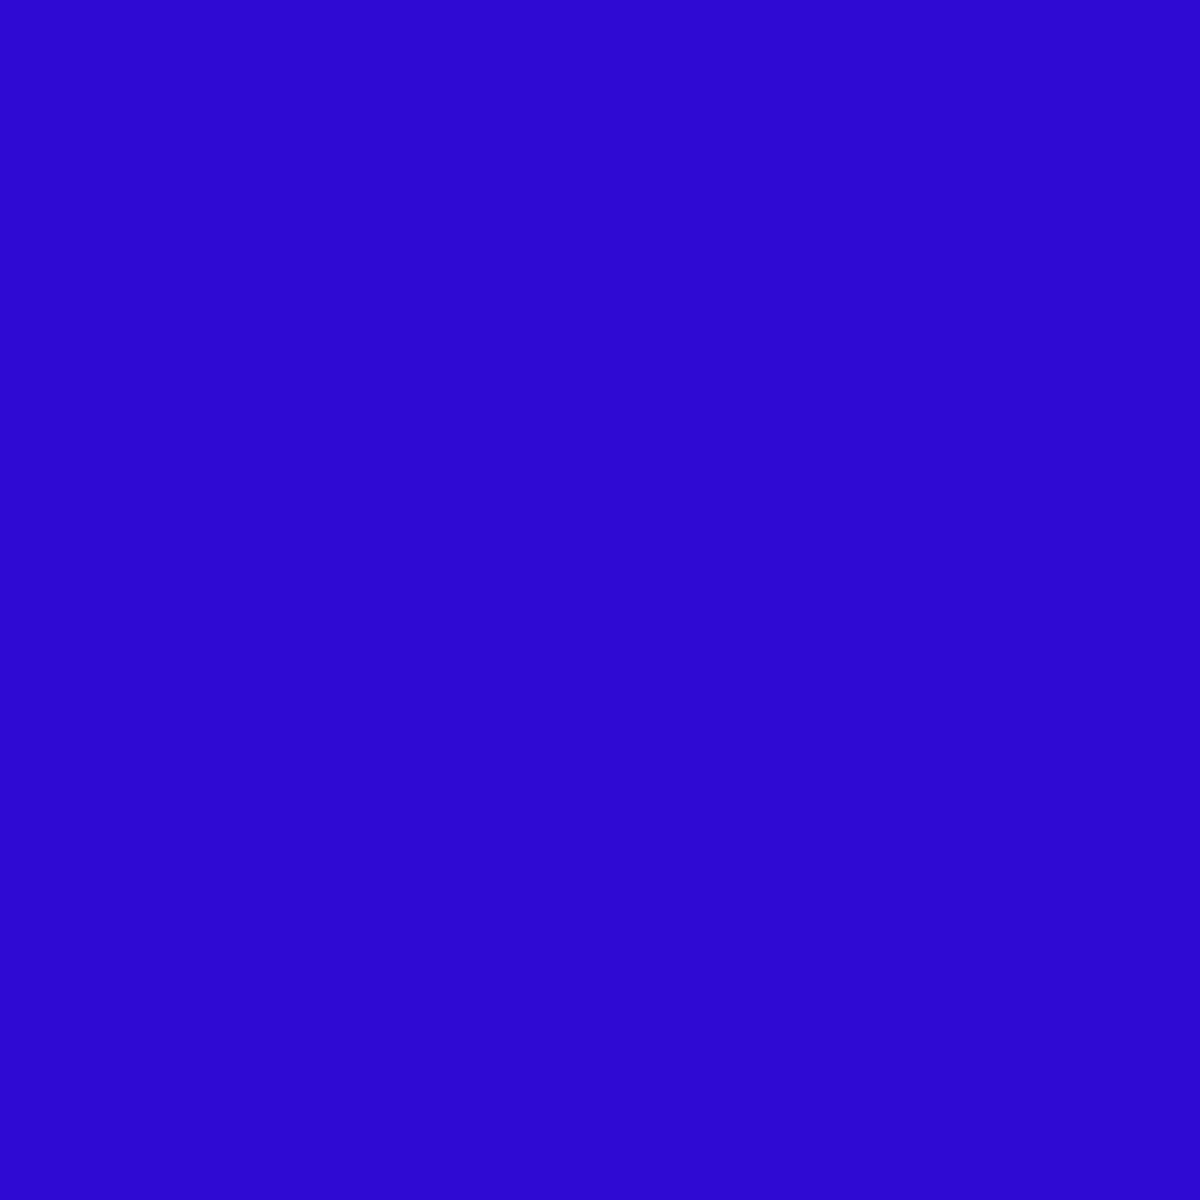 Lefranc Bourgeois - Encres d'impression de bloc Lino - 250 ml - bleu brillant